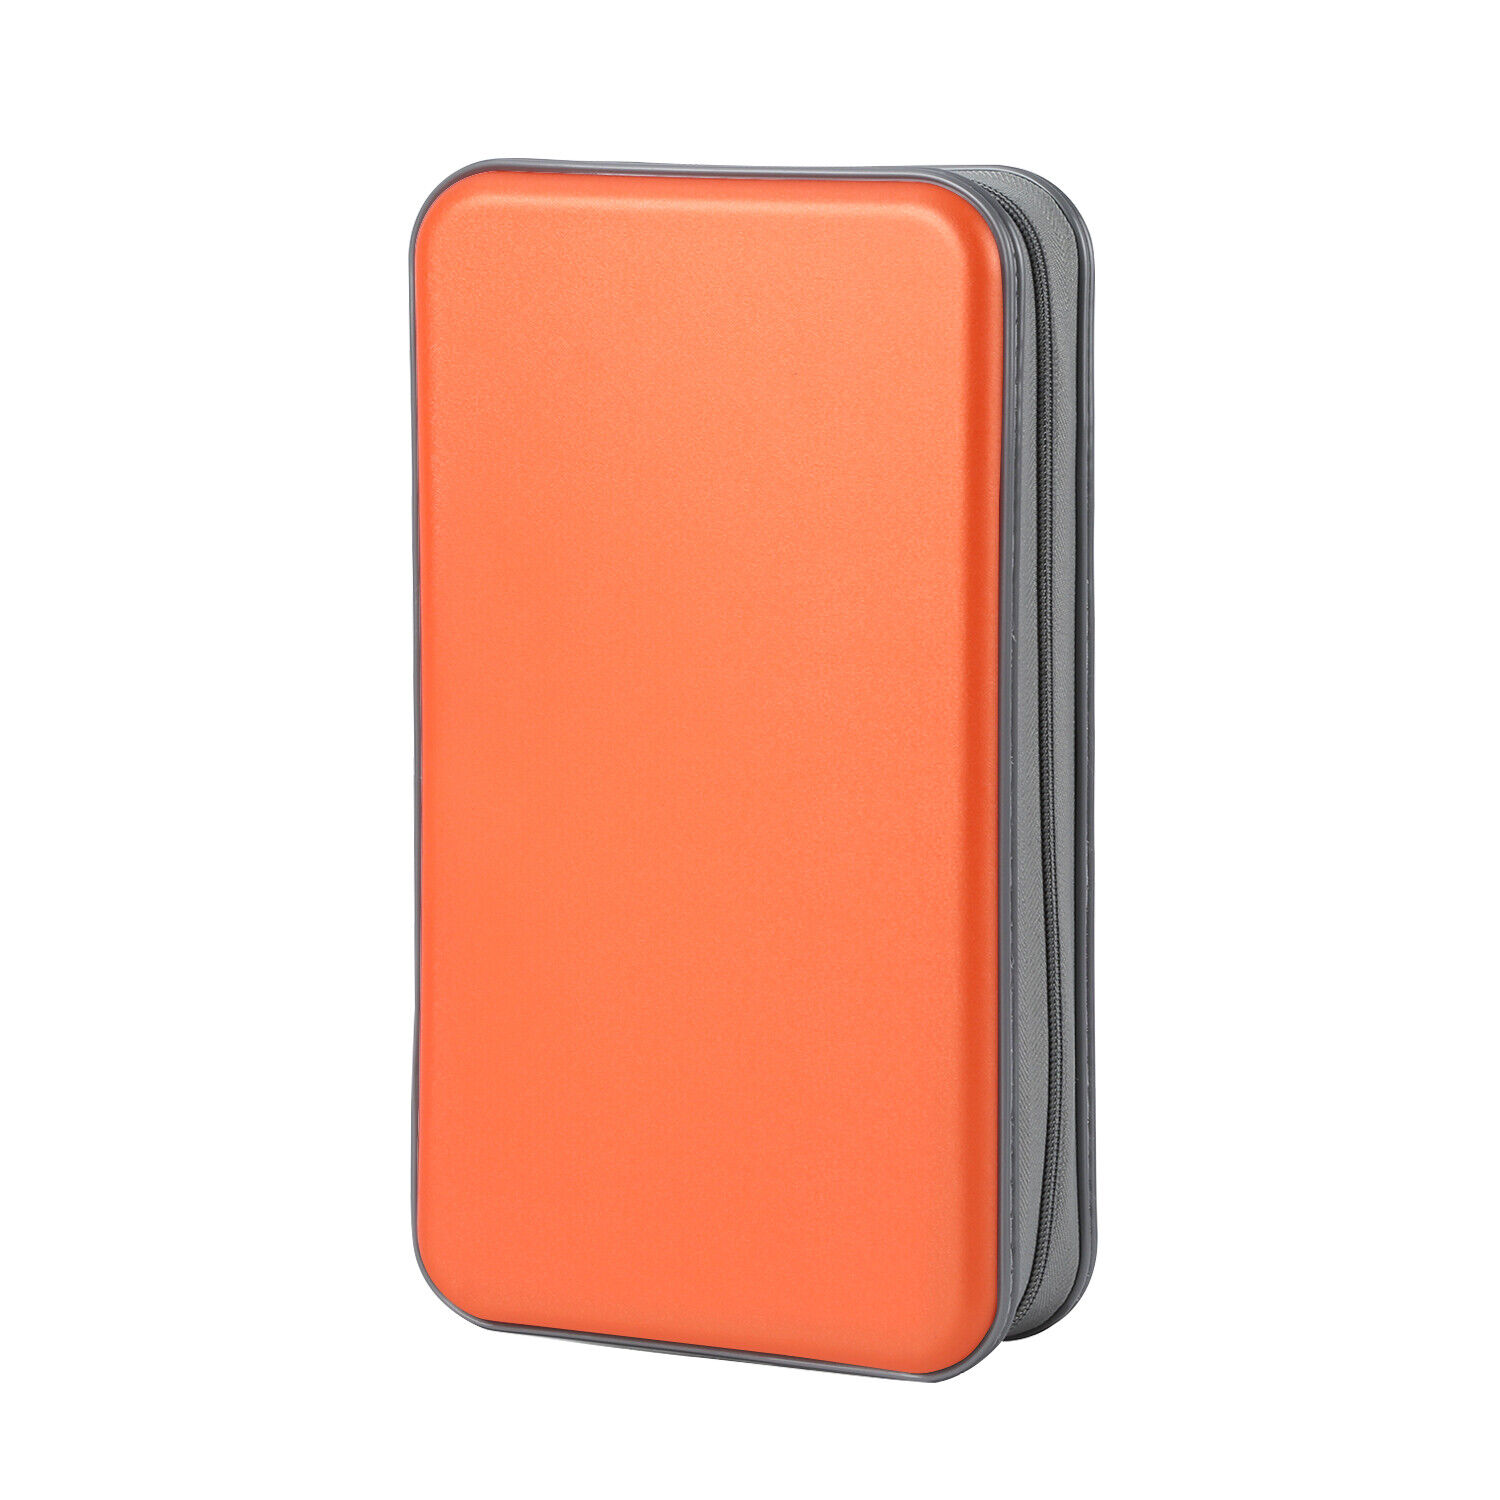 96 Disc CD Case DVD VCD Storage Organize Holder Carry Wallet Zipper Bag Orange